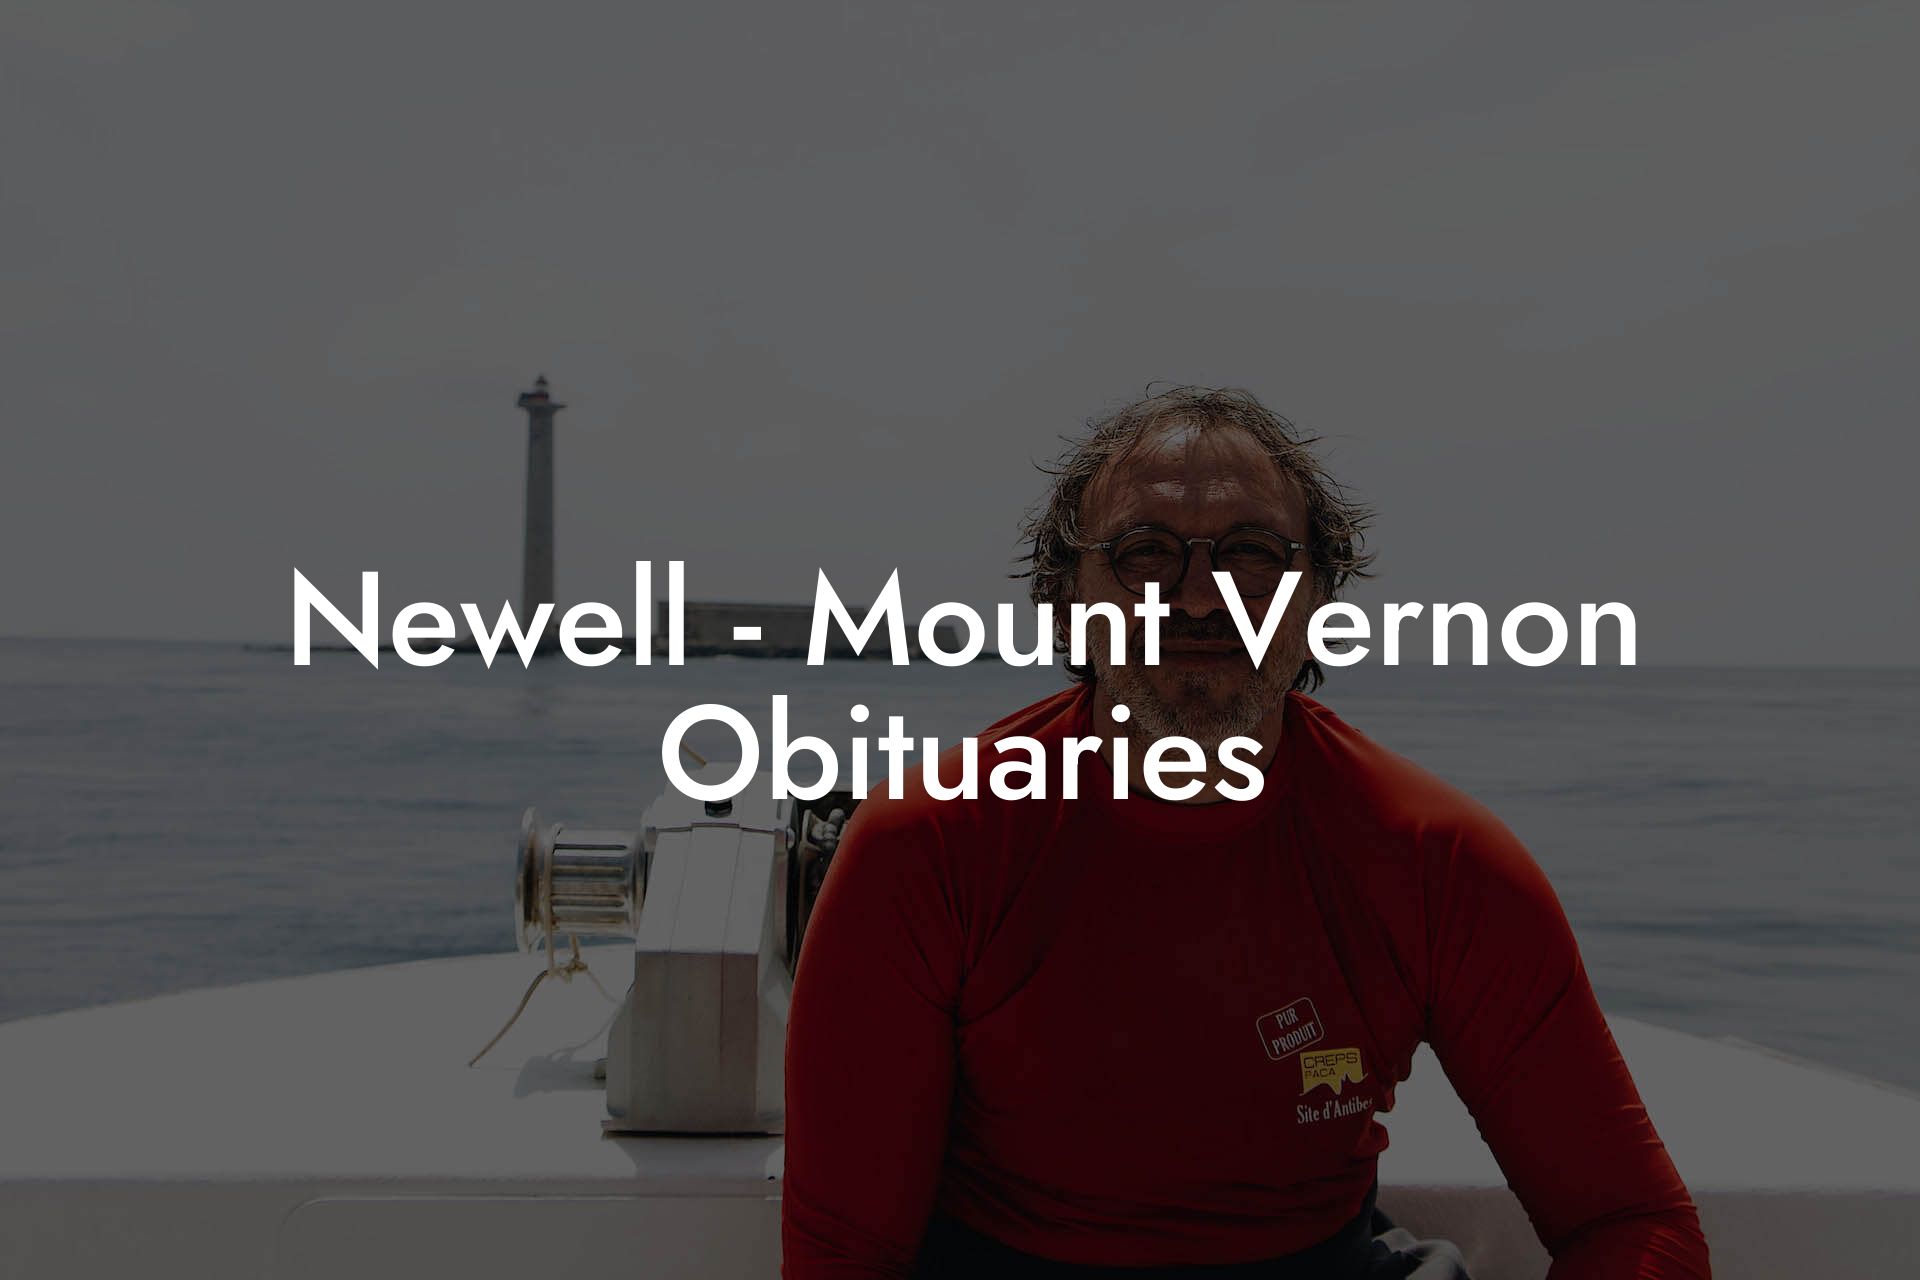 Newell - Mount Vernon Obituaries